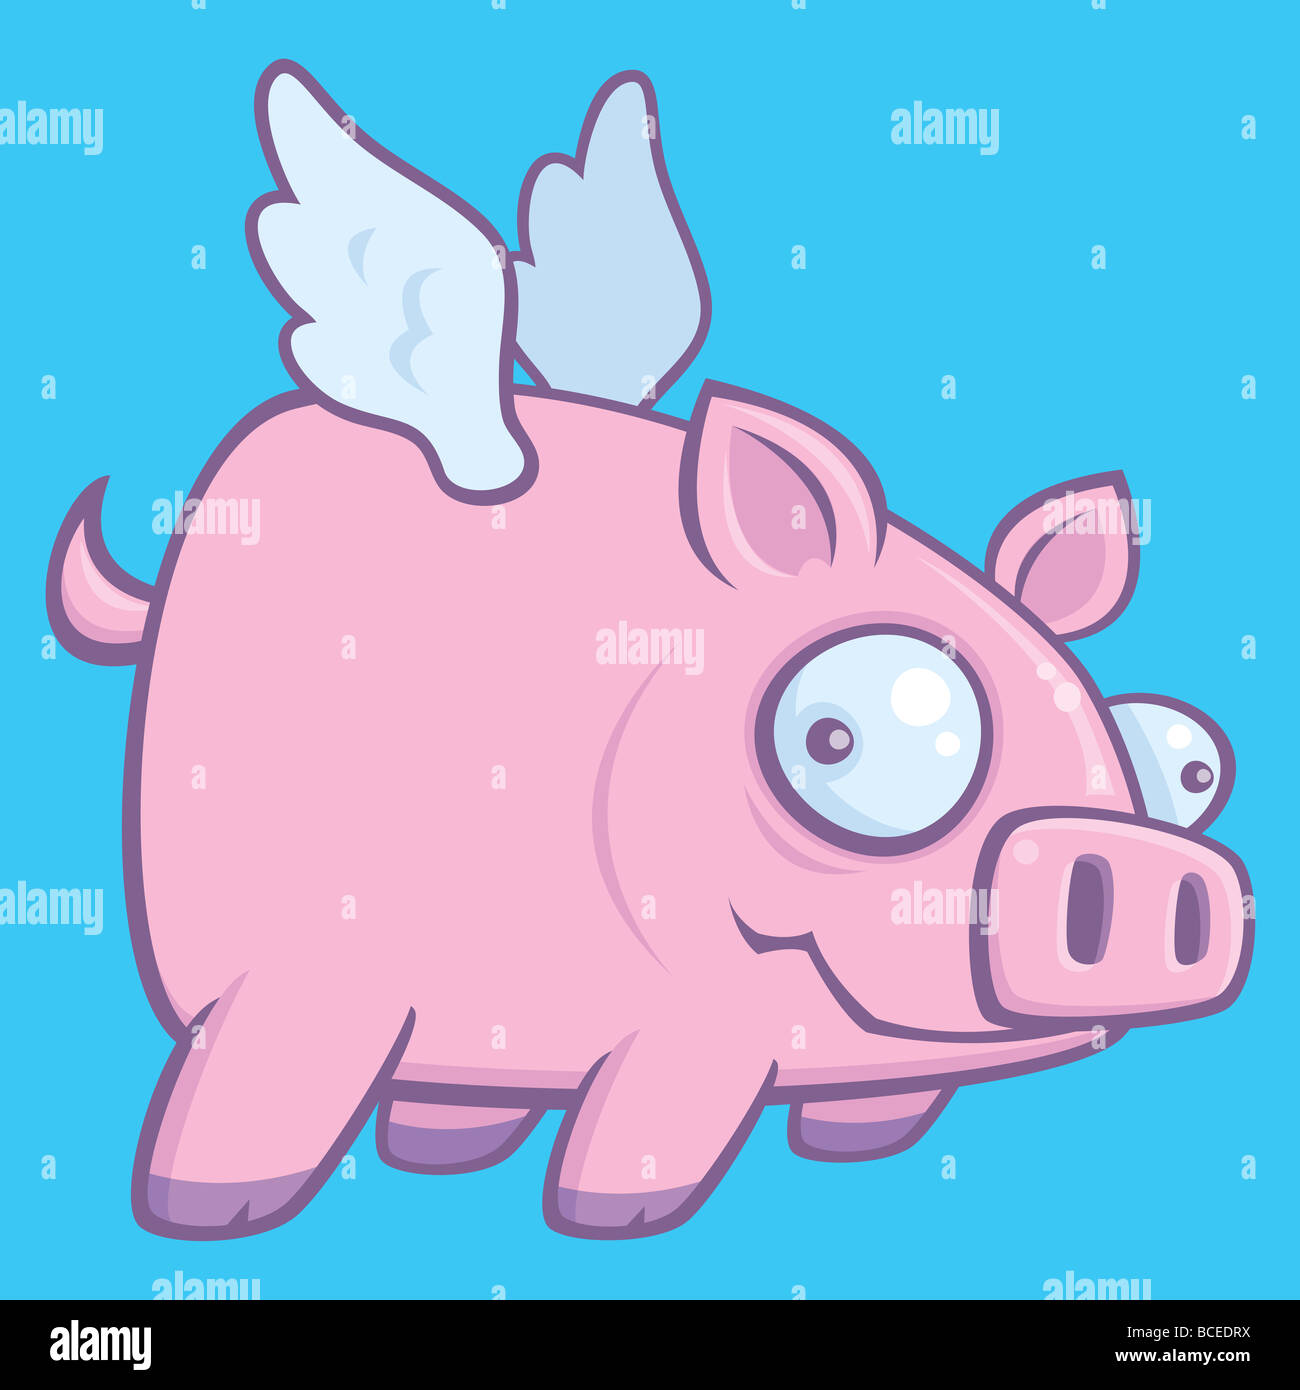 Cartoon vector illustration of a flying pig Stock Photo - Alamy